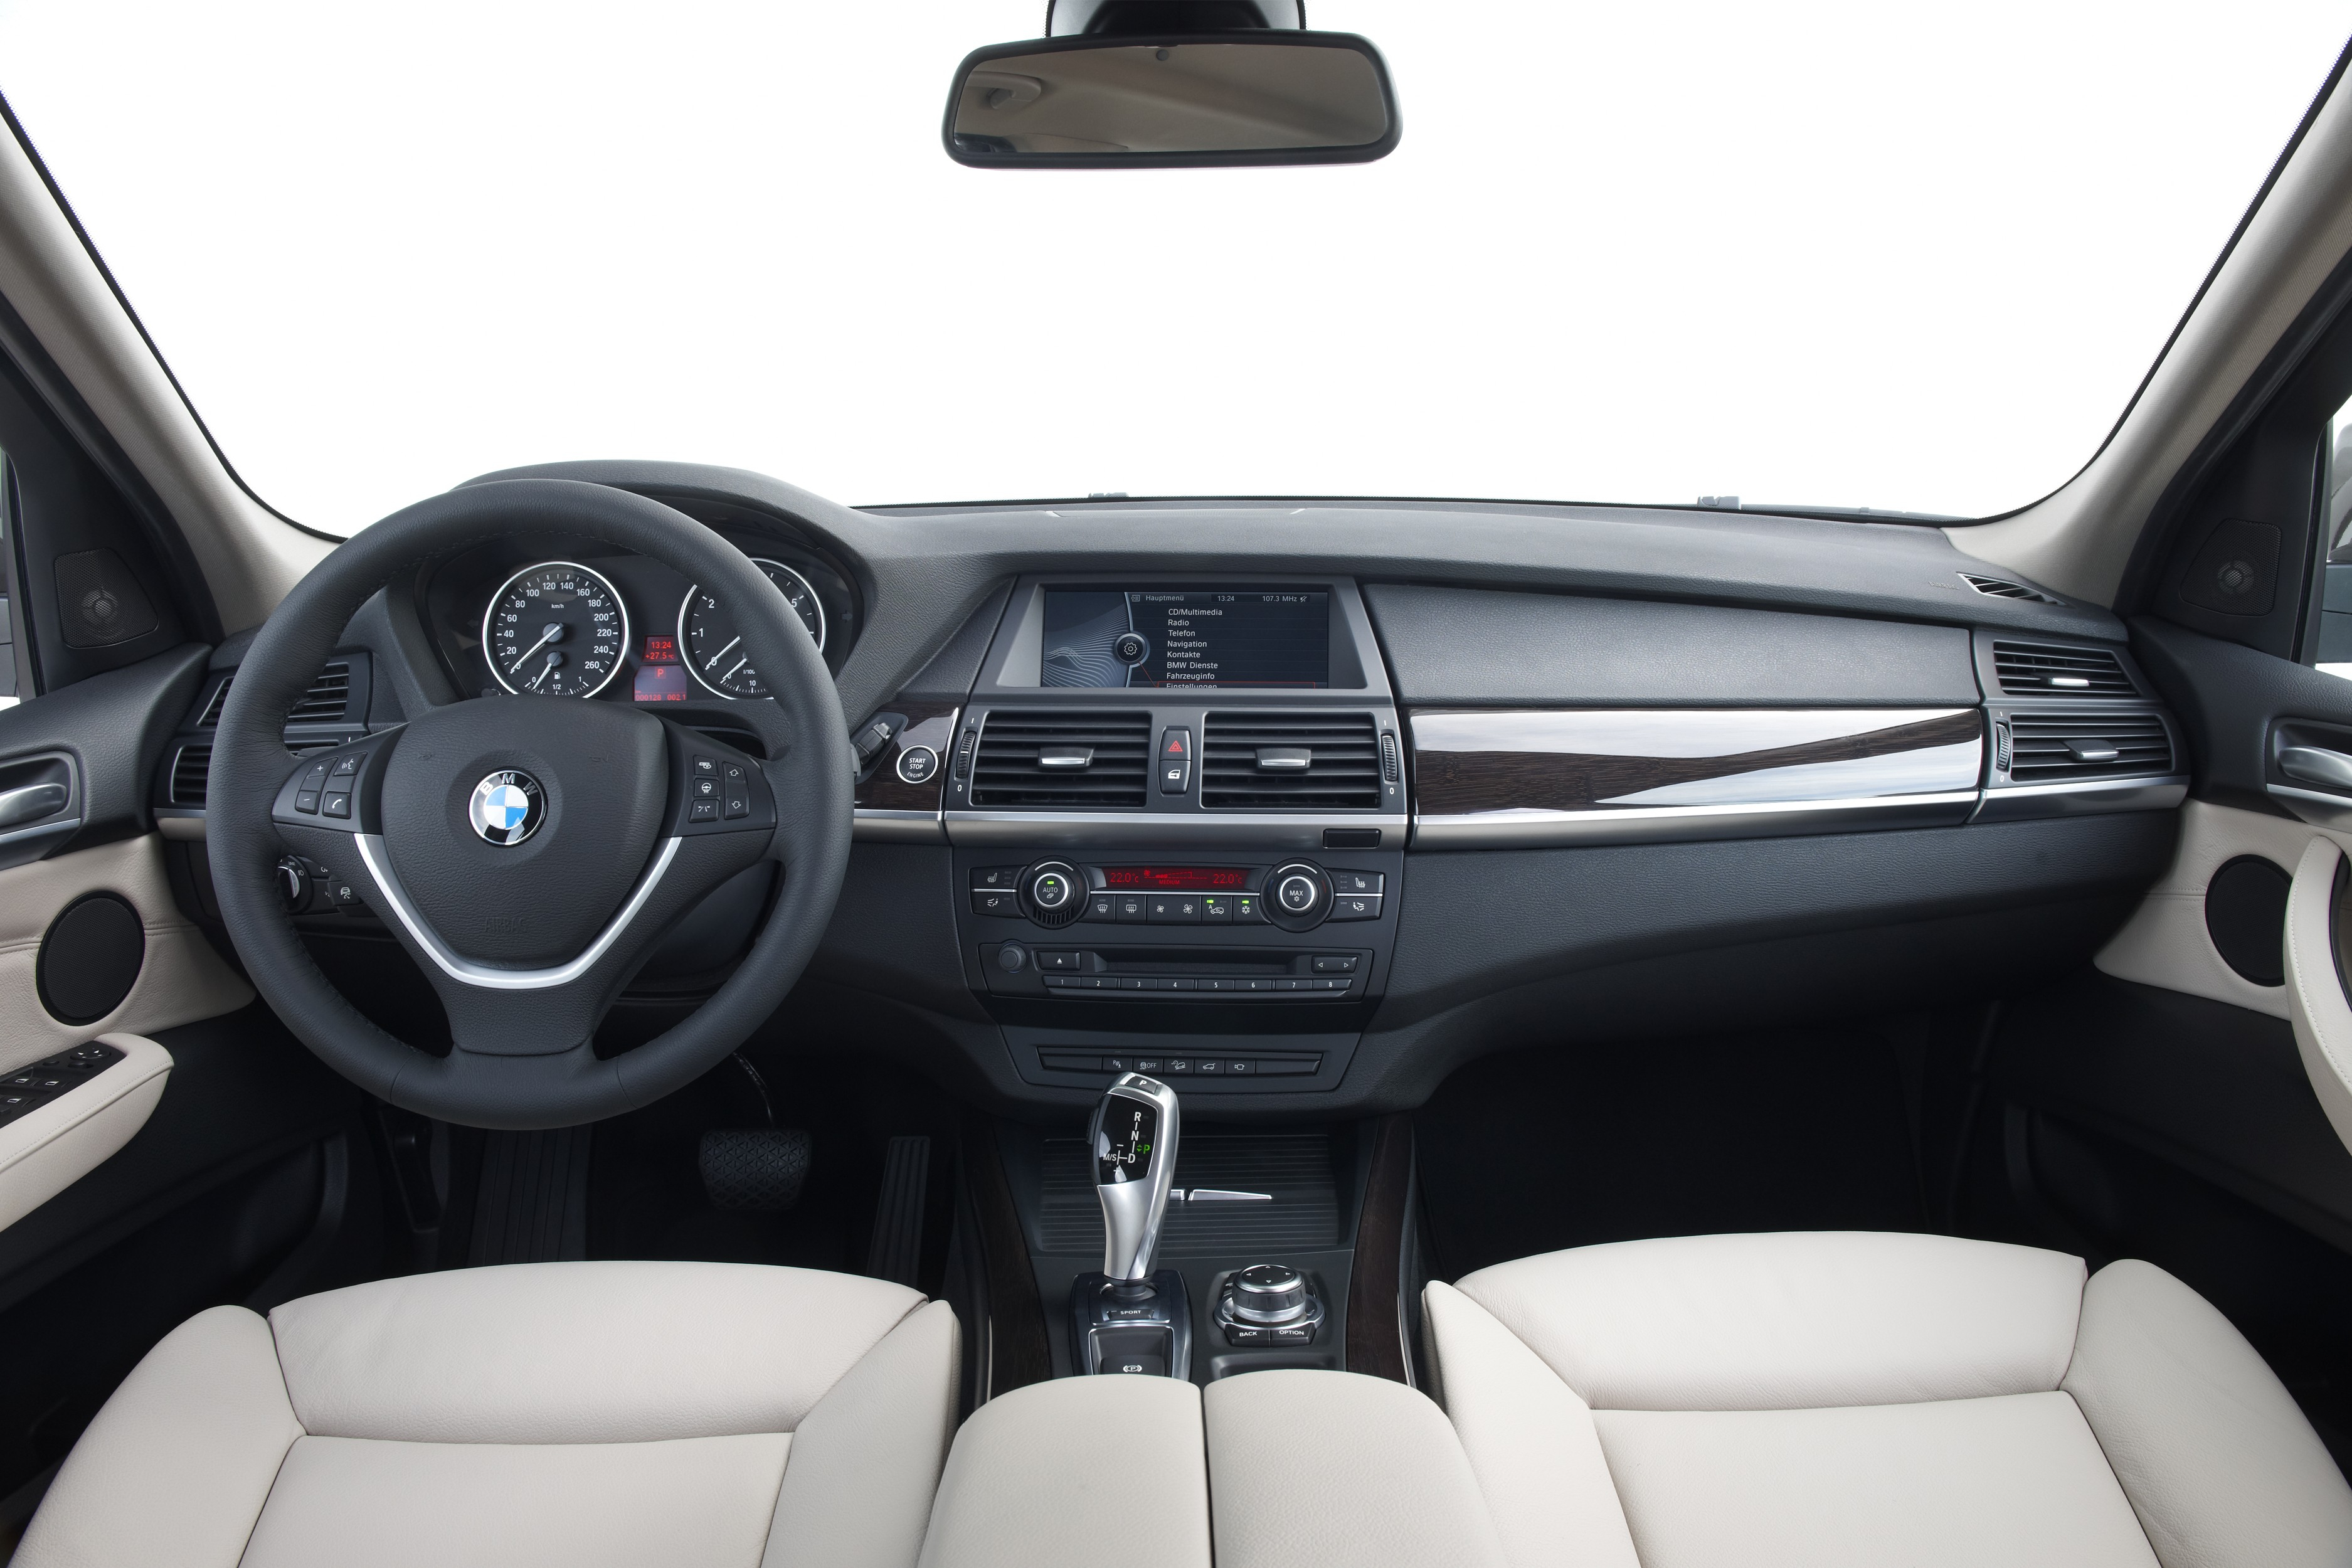 Салон х5 е70. BMW x5 Interior 2013. BMW x5 2011. BMW x5m 2011. BMW x5 e70 2010.